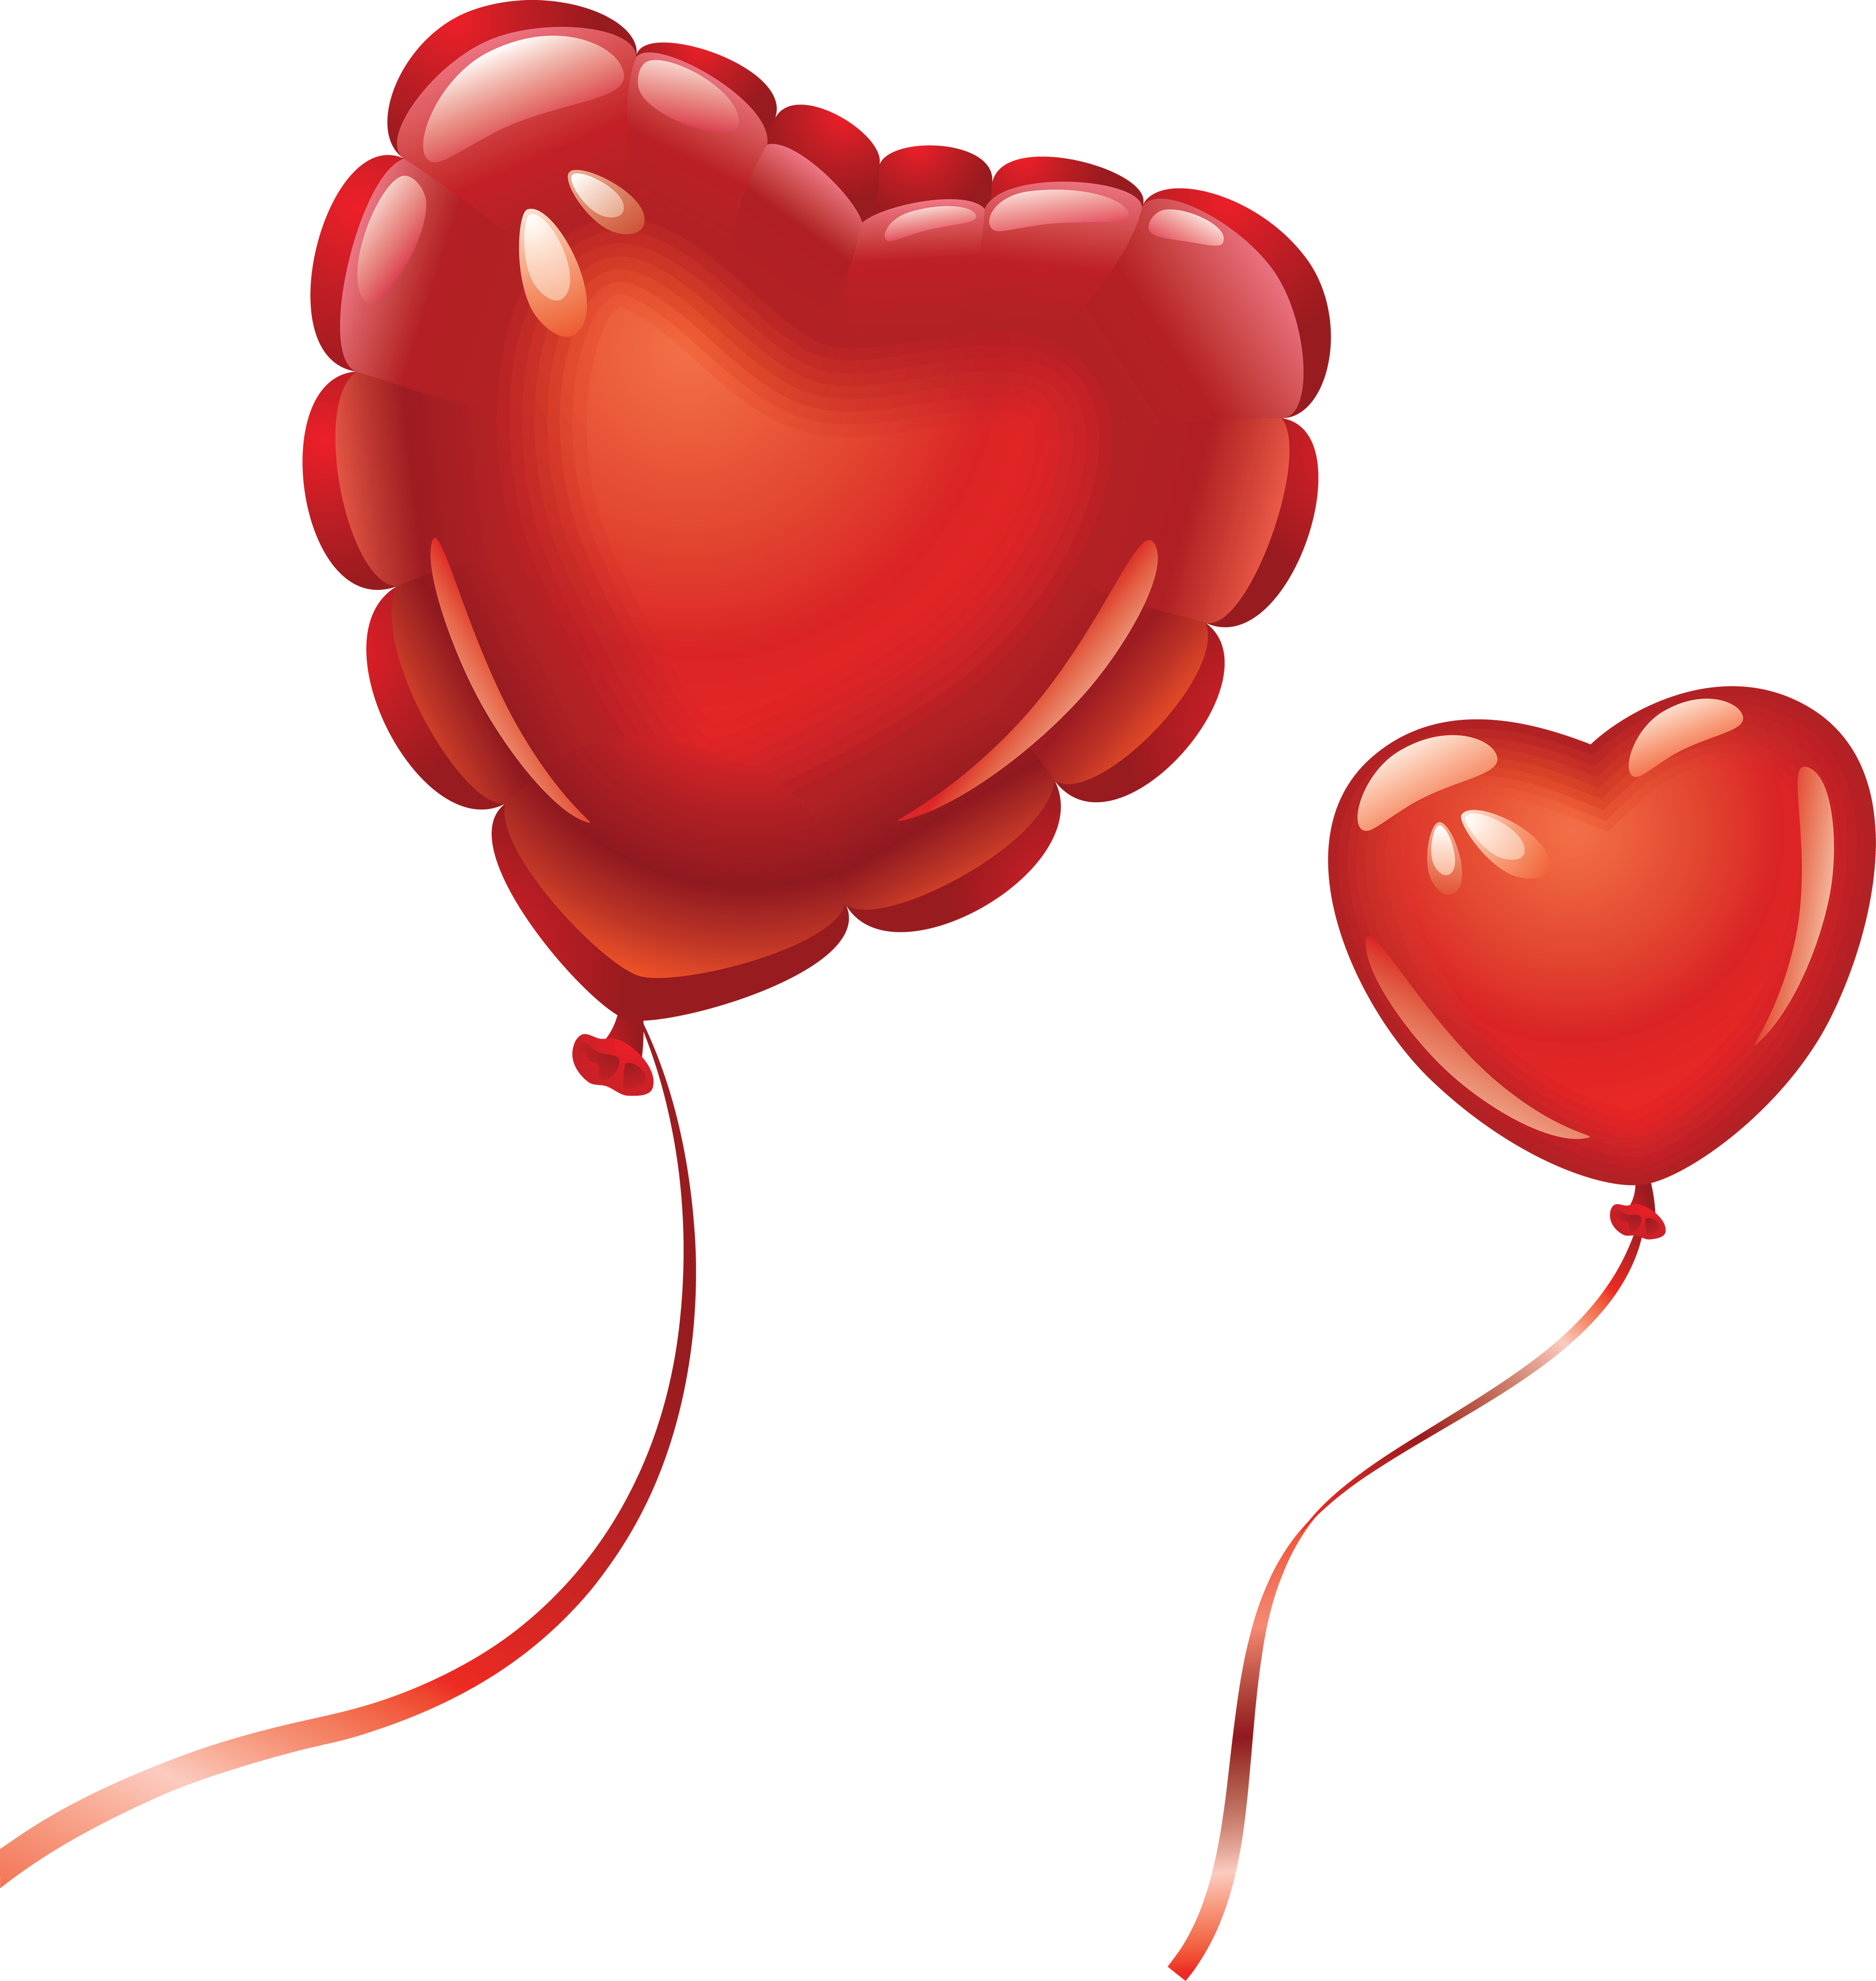 Heart Balloon Png Image Free Download Heart Balloons   Heart Balloon    